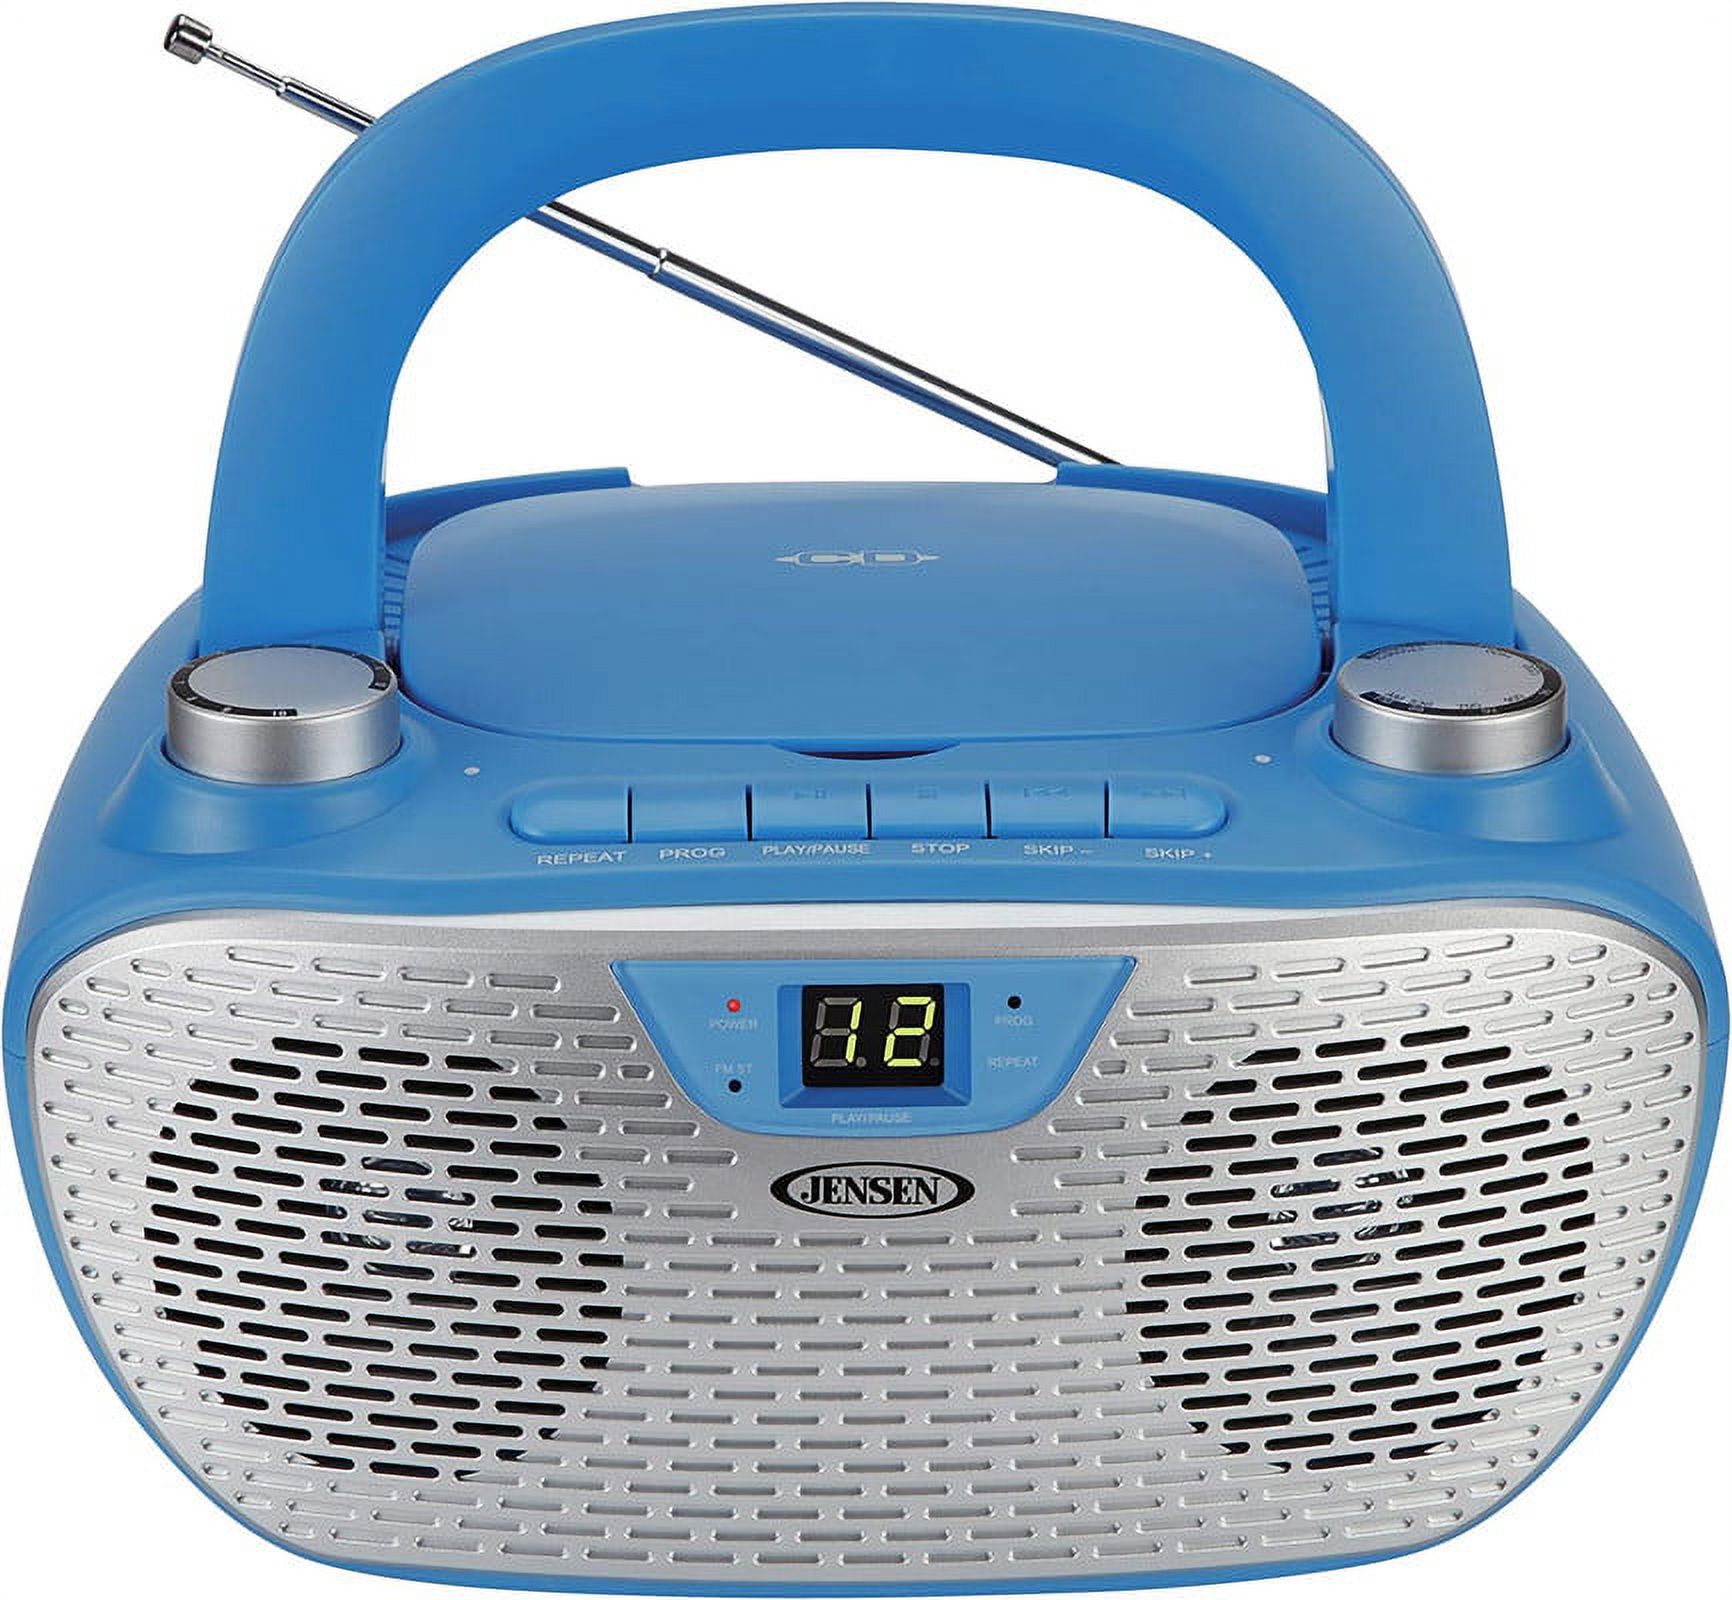 Jensen Bluetooth MP3 Boombox, Blue, CD-485-BL - image 2 of 3